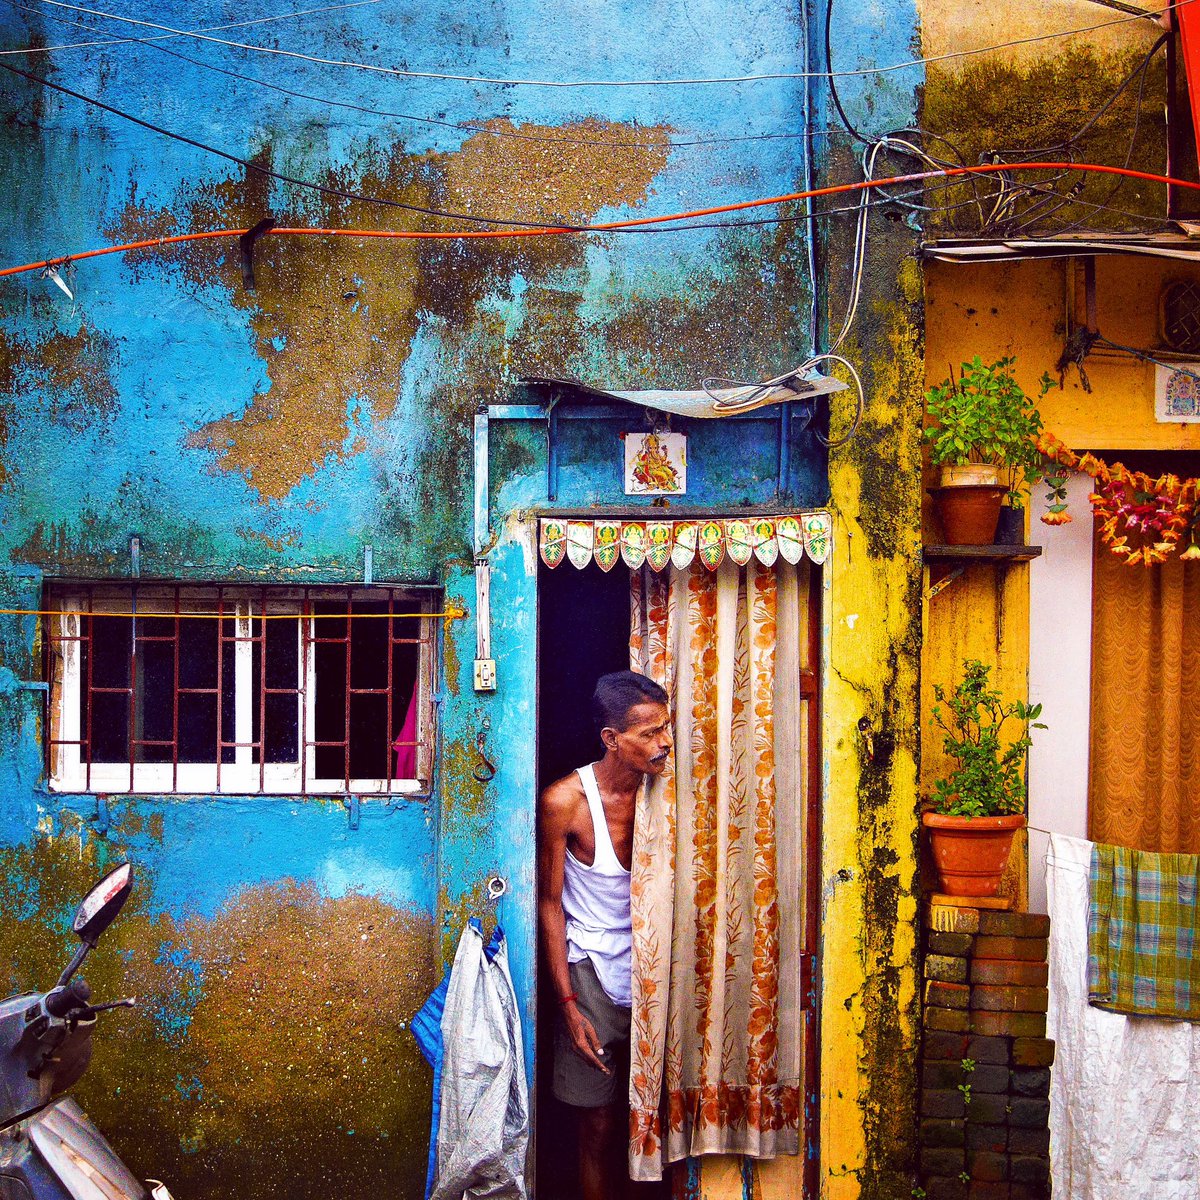 Travel photo of the day: Mumbai // India 🇮🇳 

#indiapictures #indiatravelgram #indiaphotography #indiatravel #mumbaibloggers #mumbaiblogger #travelblogger #travelbloggers #streetphotography #streetphotographers #urbanphotography #incredibleindia